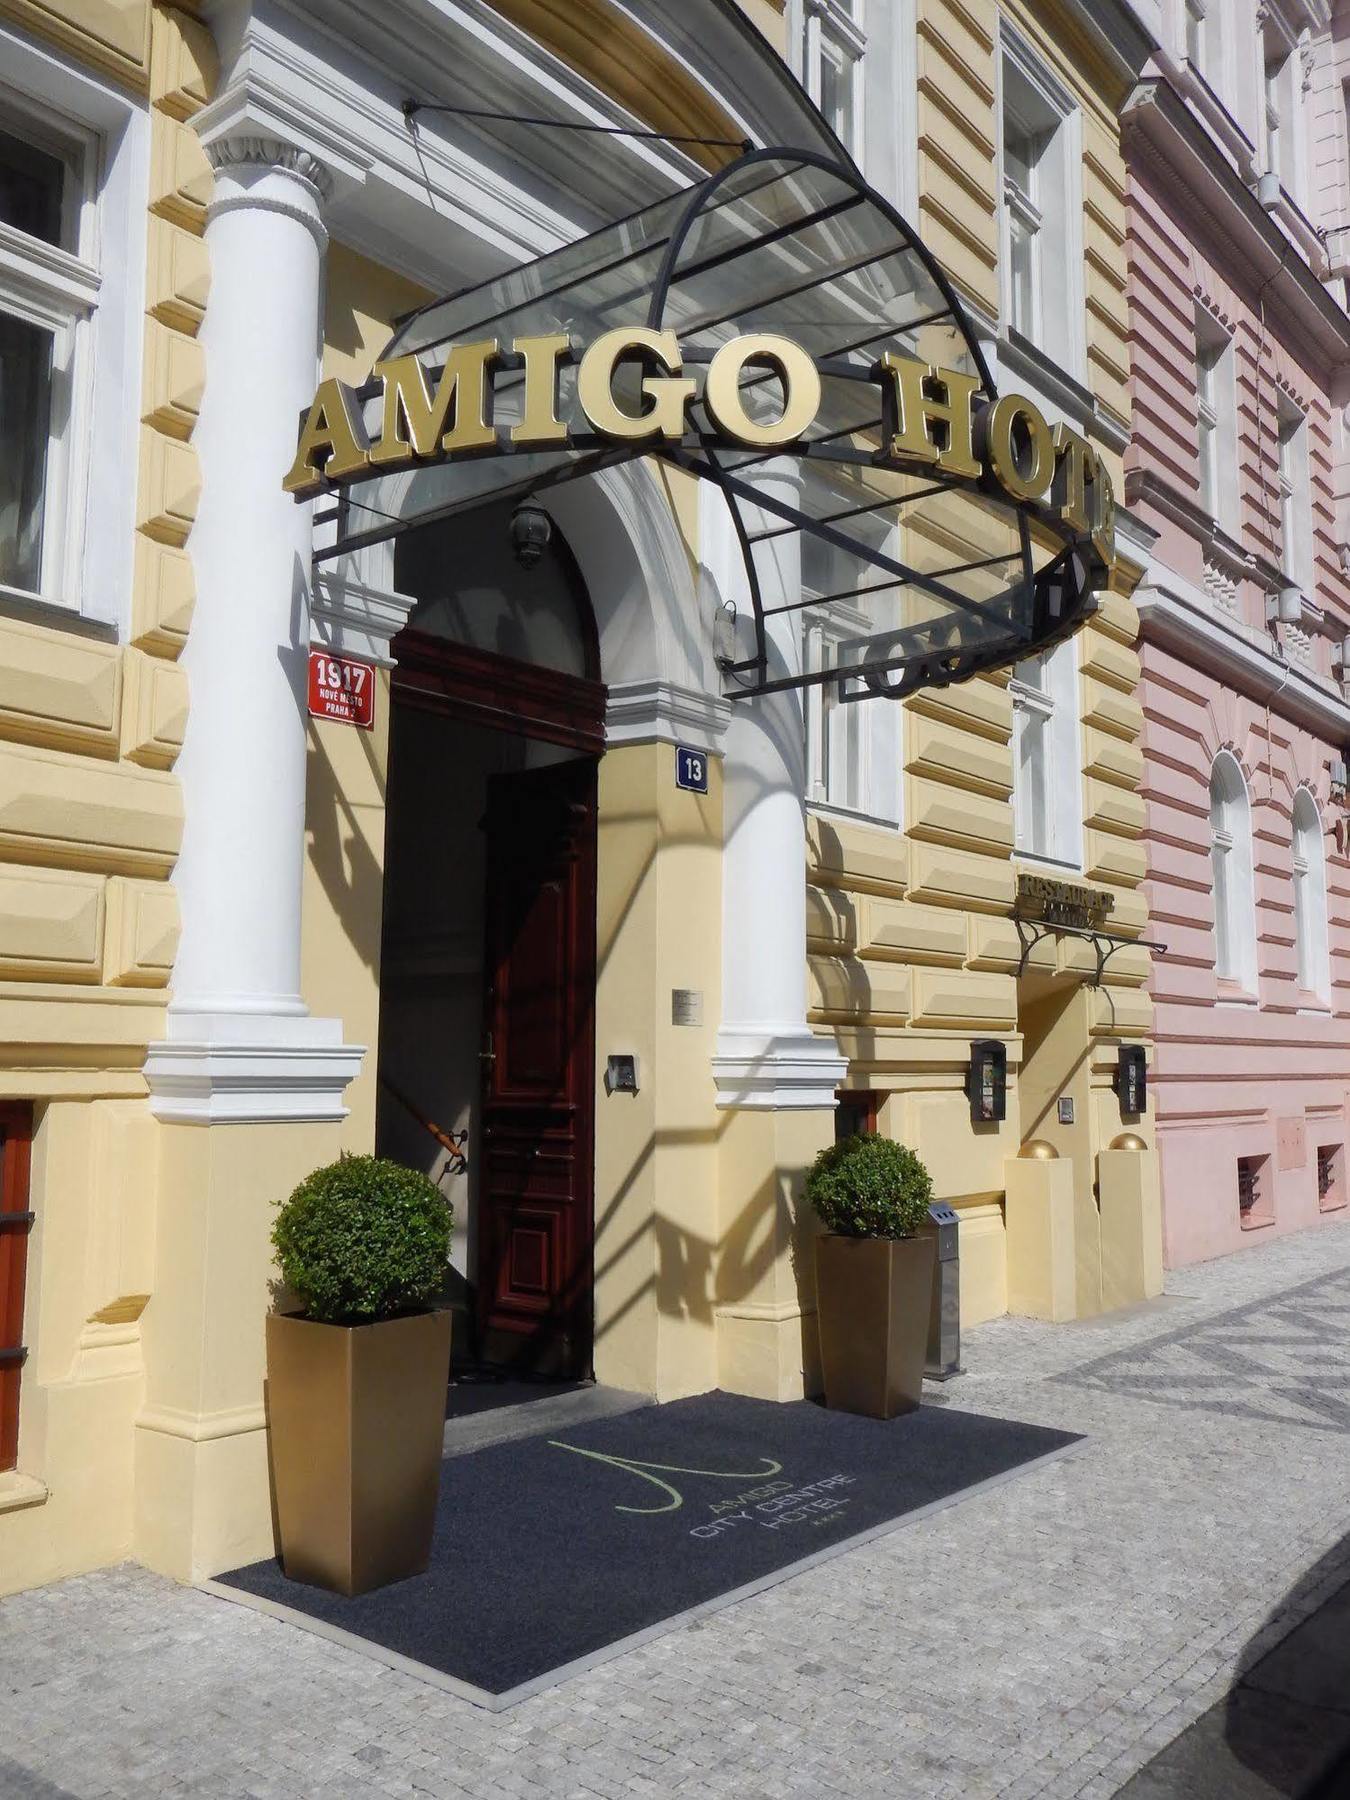 NEXT DOOR BY IMPERIAL, Prague - Nove Mesto (New Town) - Restaurant